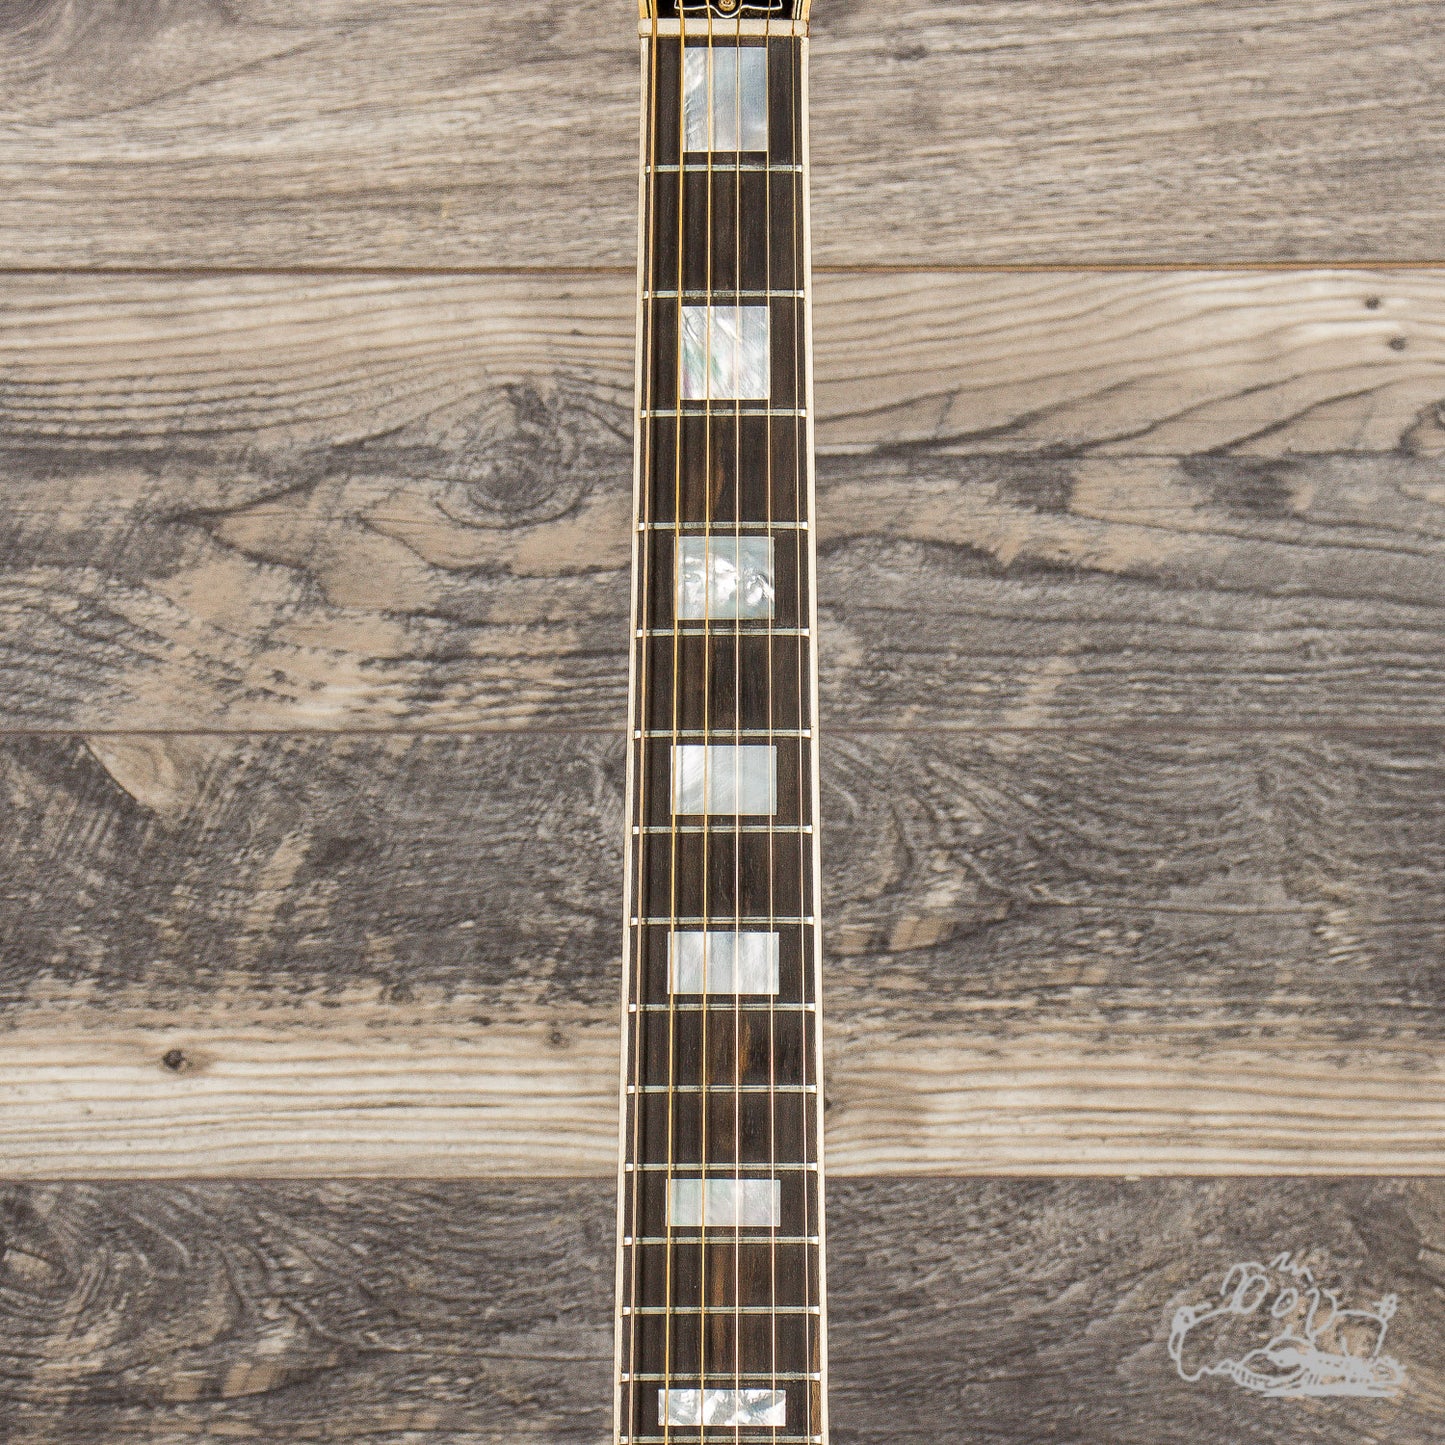 1974 Gibson Les Paul Custom